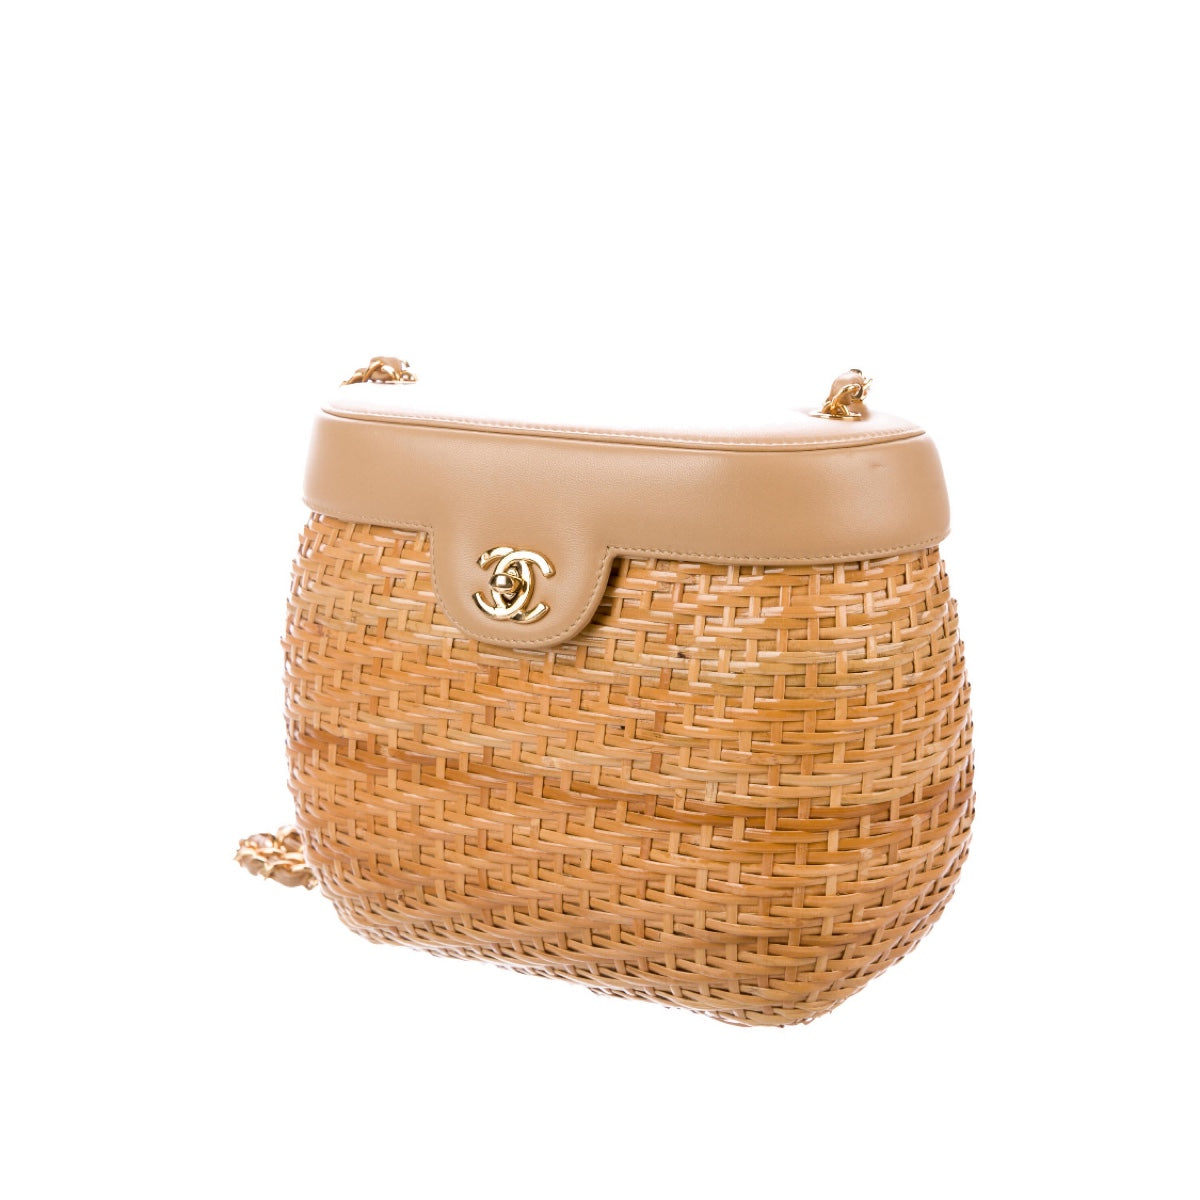 Chanel Wicker Love Basket Small Bag